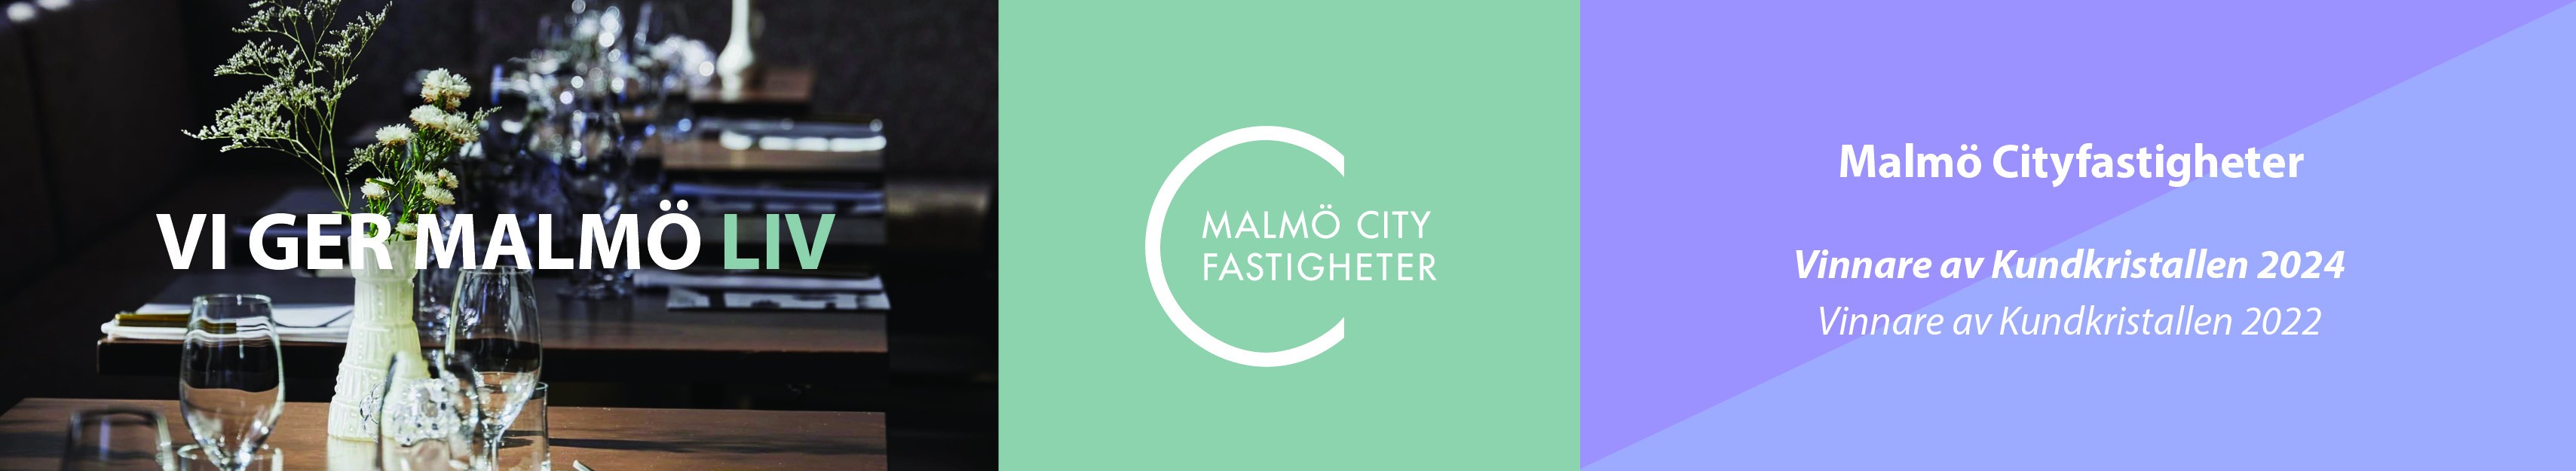 Malmö Cityfastigheter AB